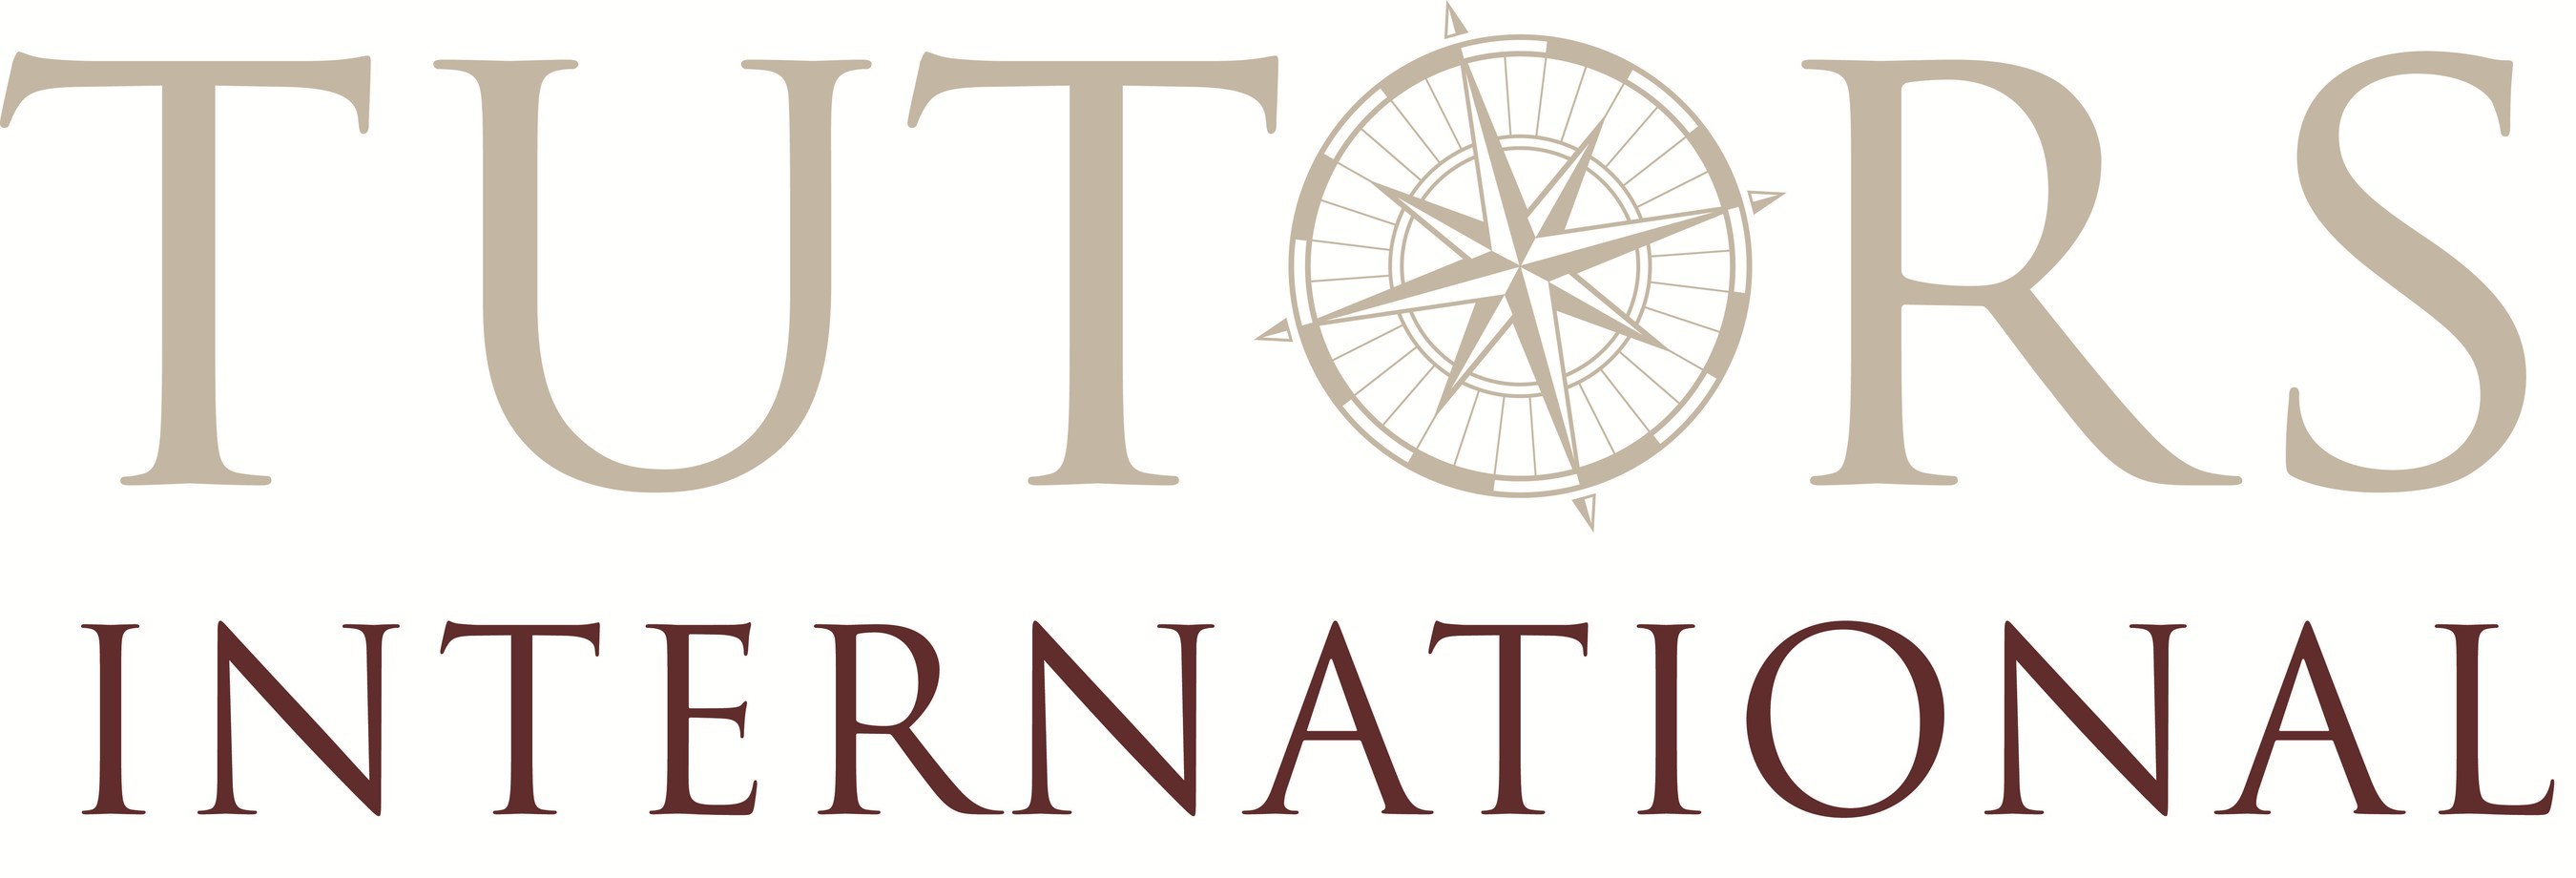 Tutors International Logo (PRNewsfoto/Tutors International)